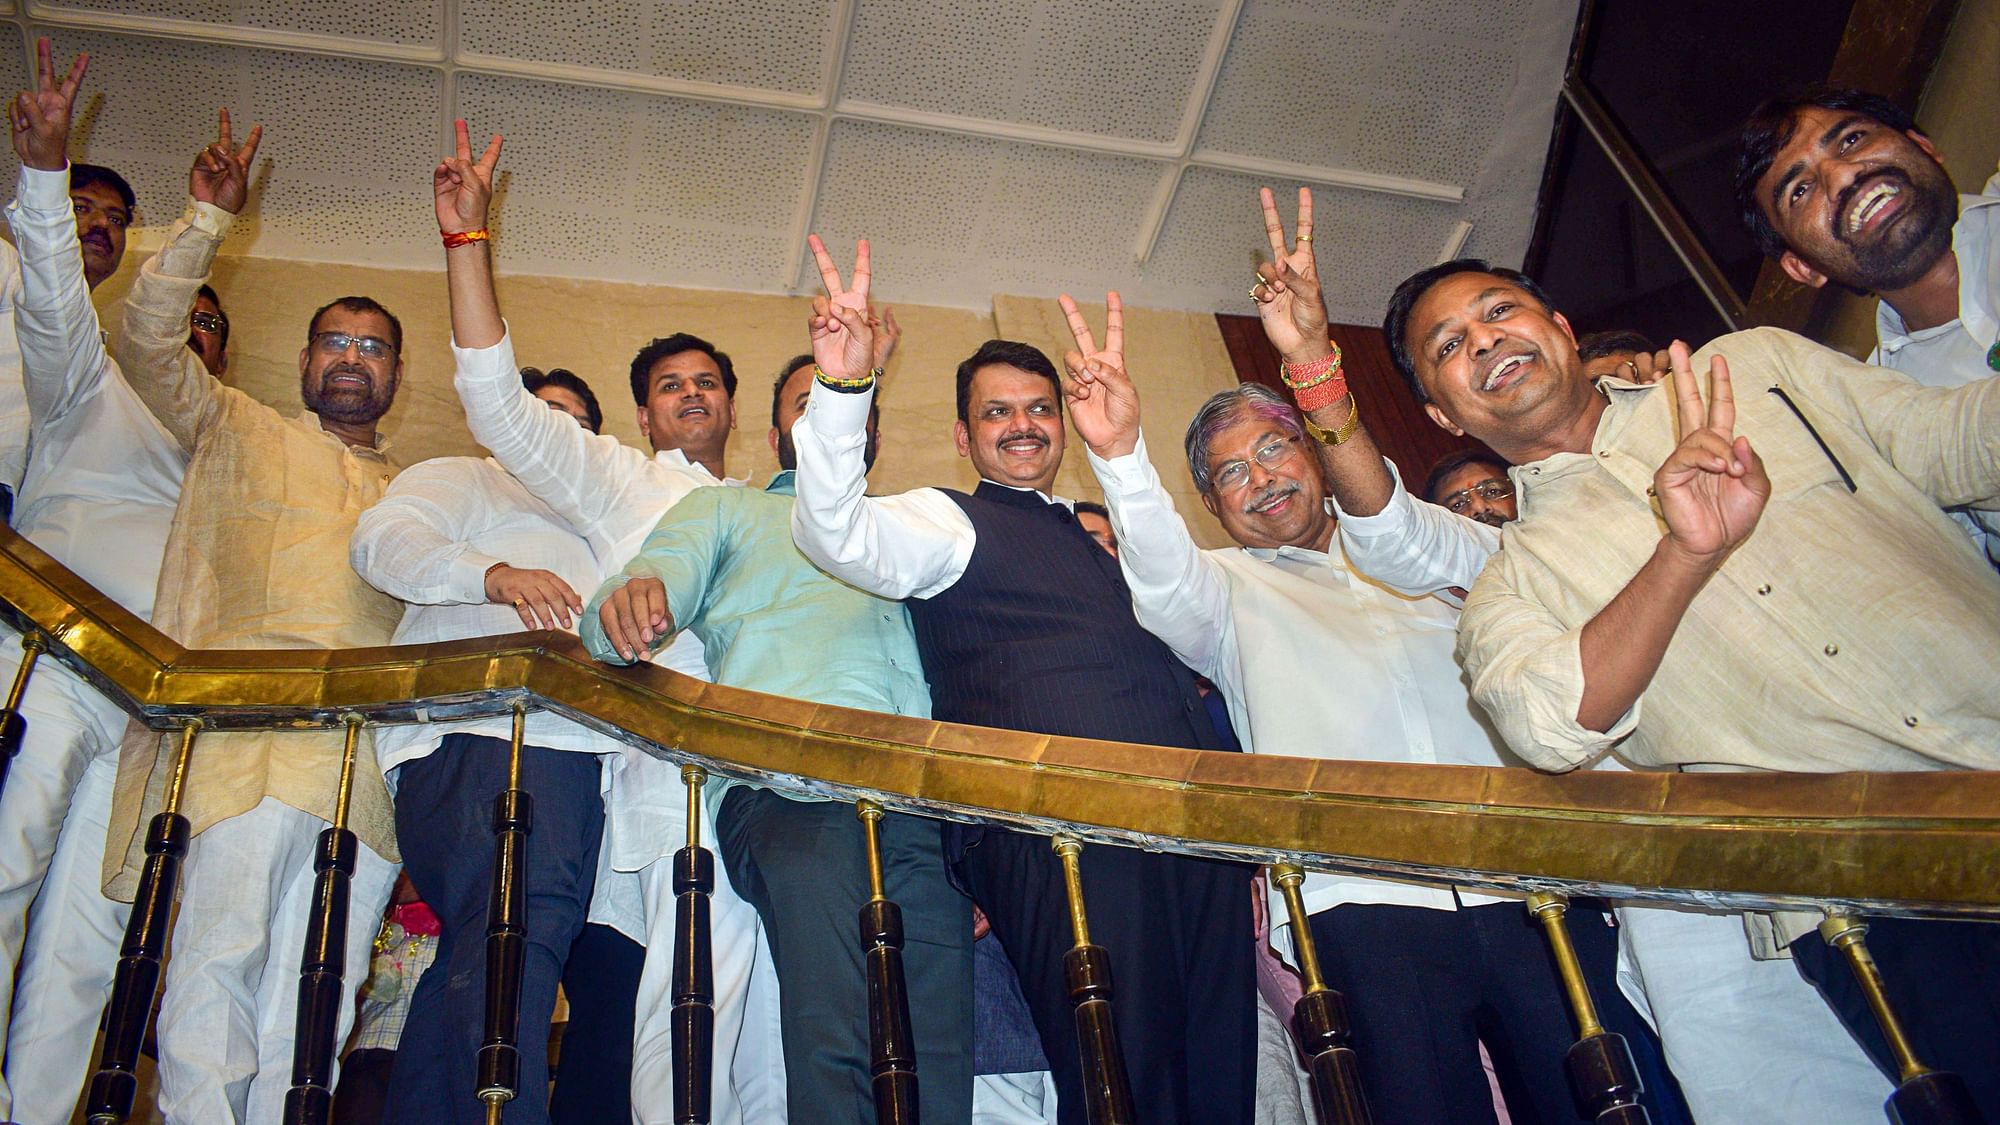 <div class="paragraphs"><p>BJP leaders celebrate after being elected as members of Maharashtra Vidhan Parishad in Mumbai.&nbsp;</p></div>